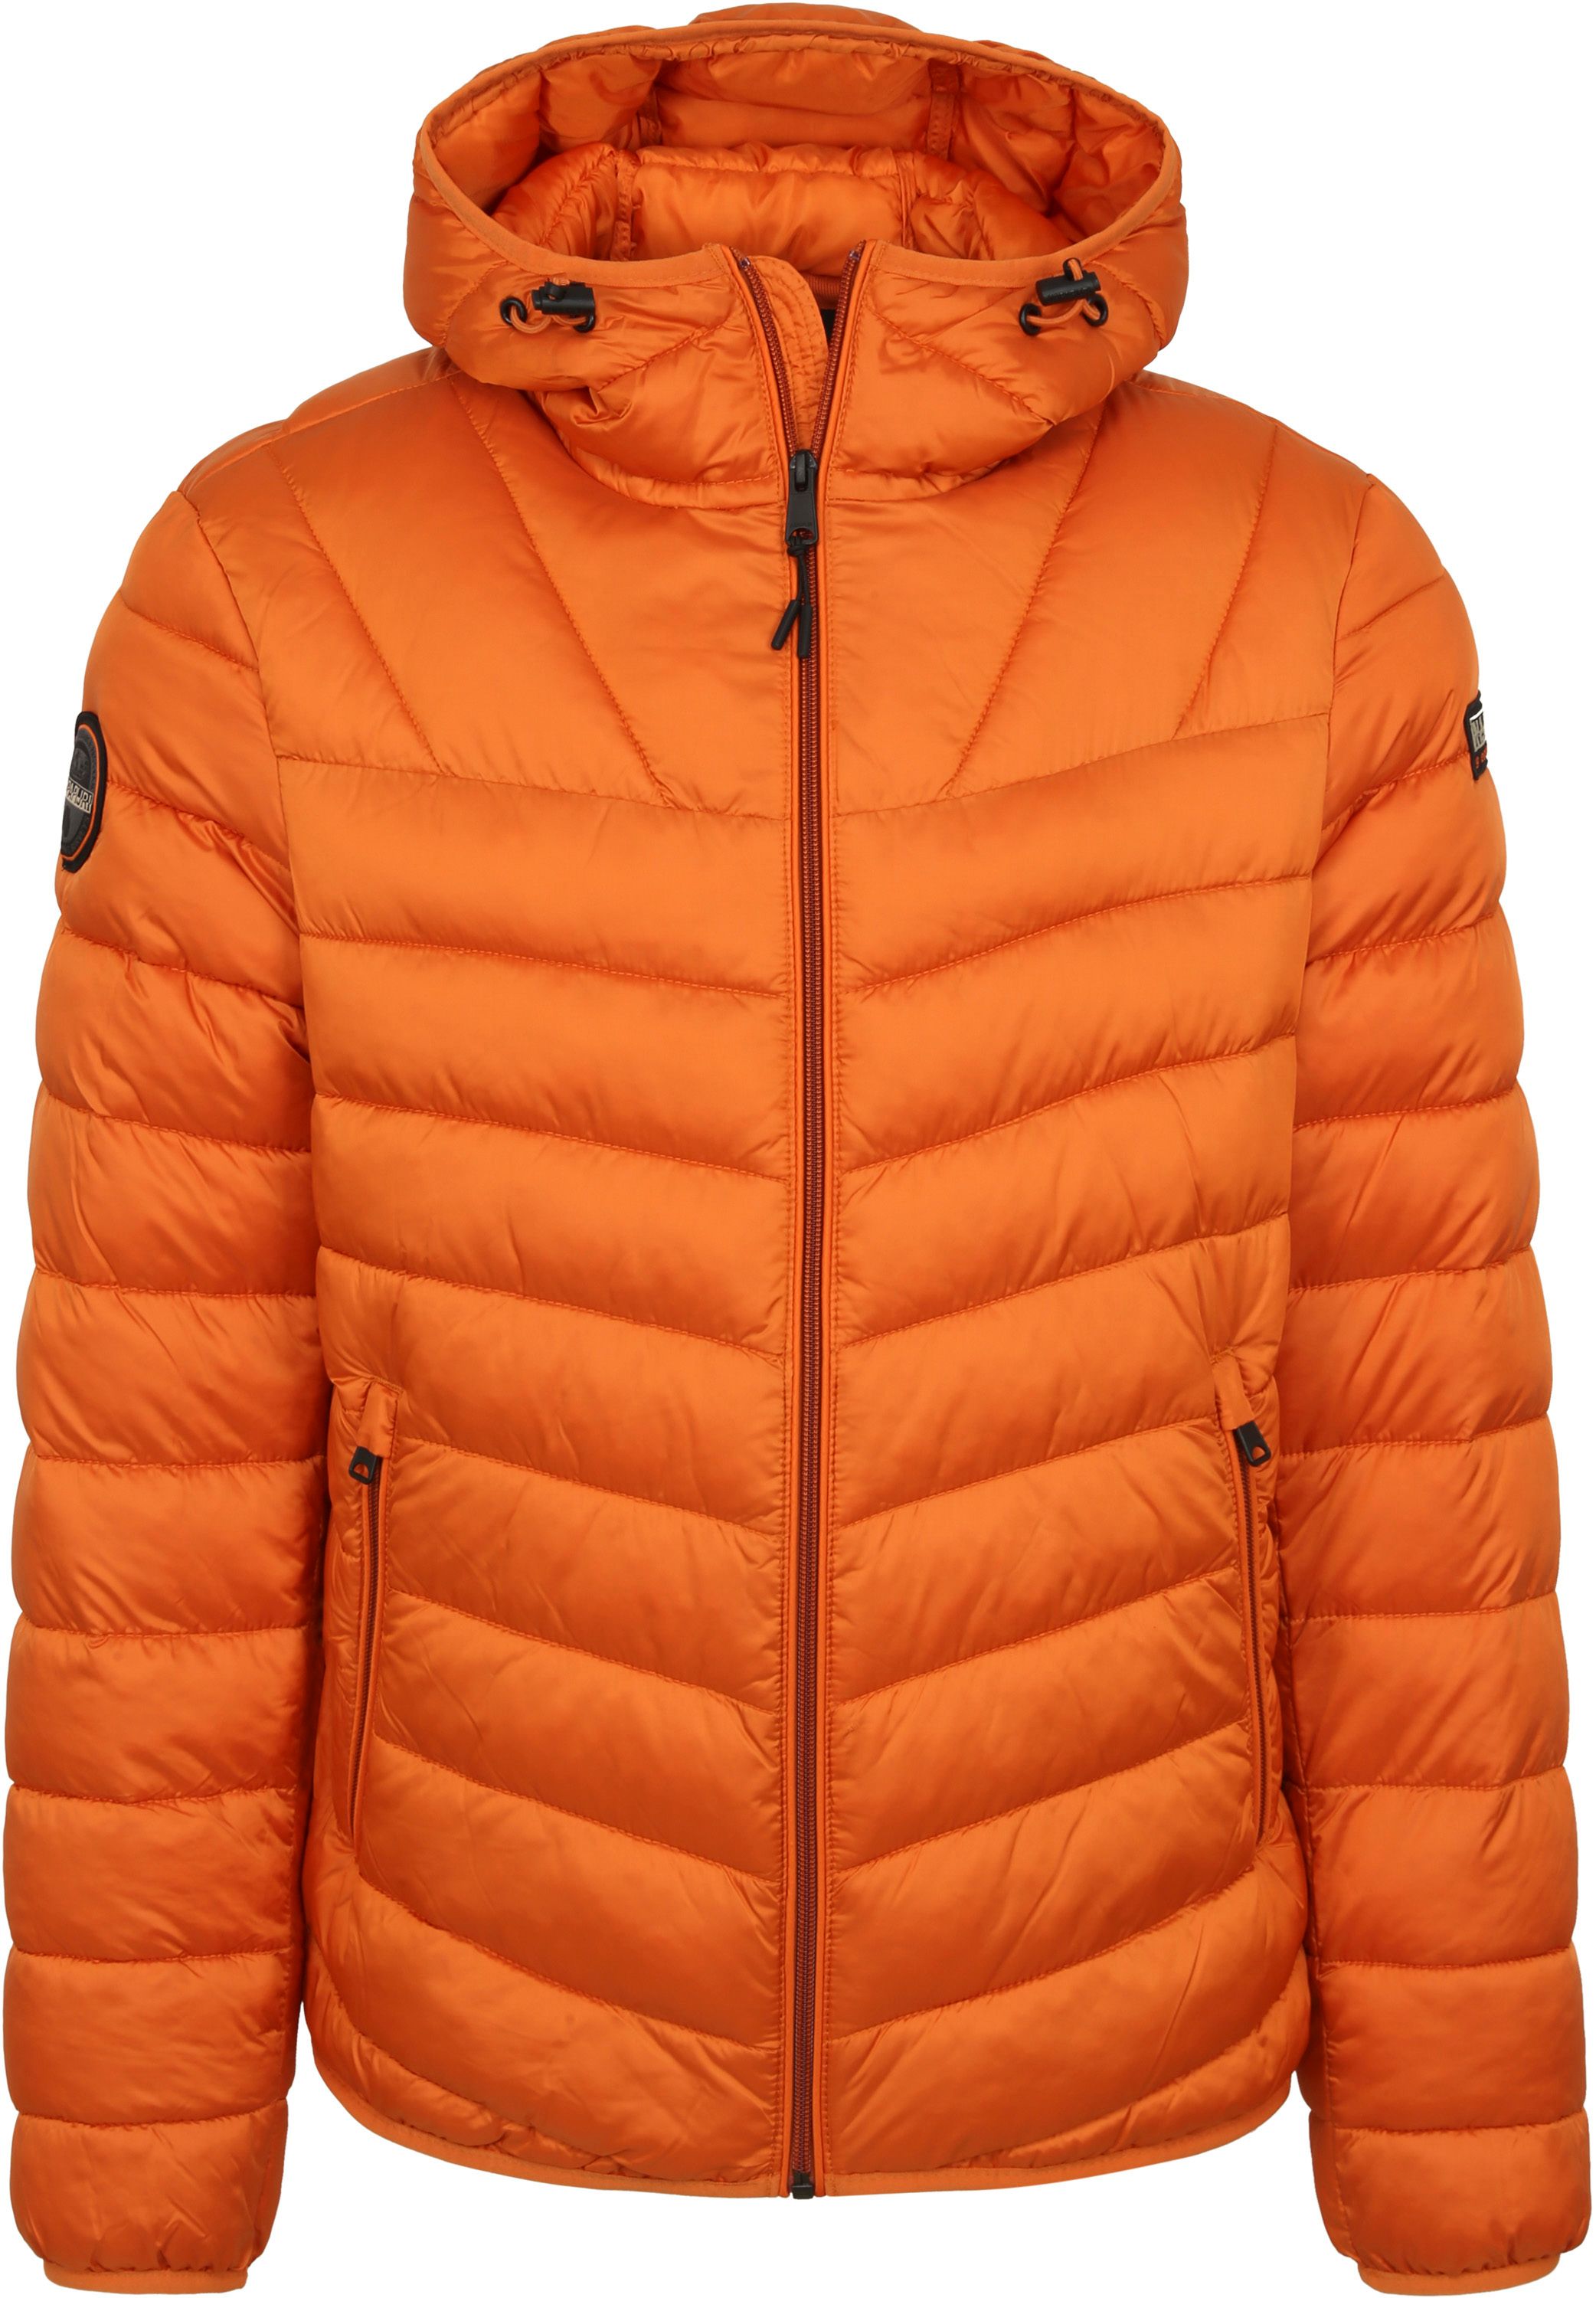 Napapijri Jacket Aerons Orange size L